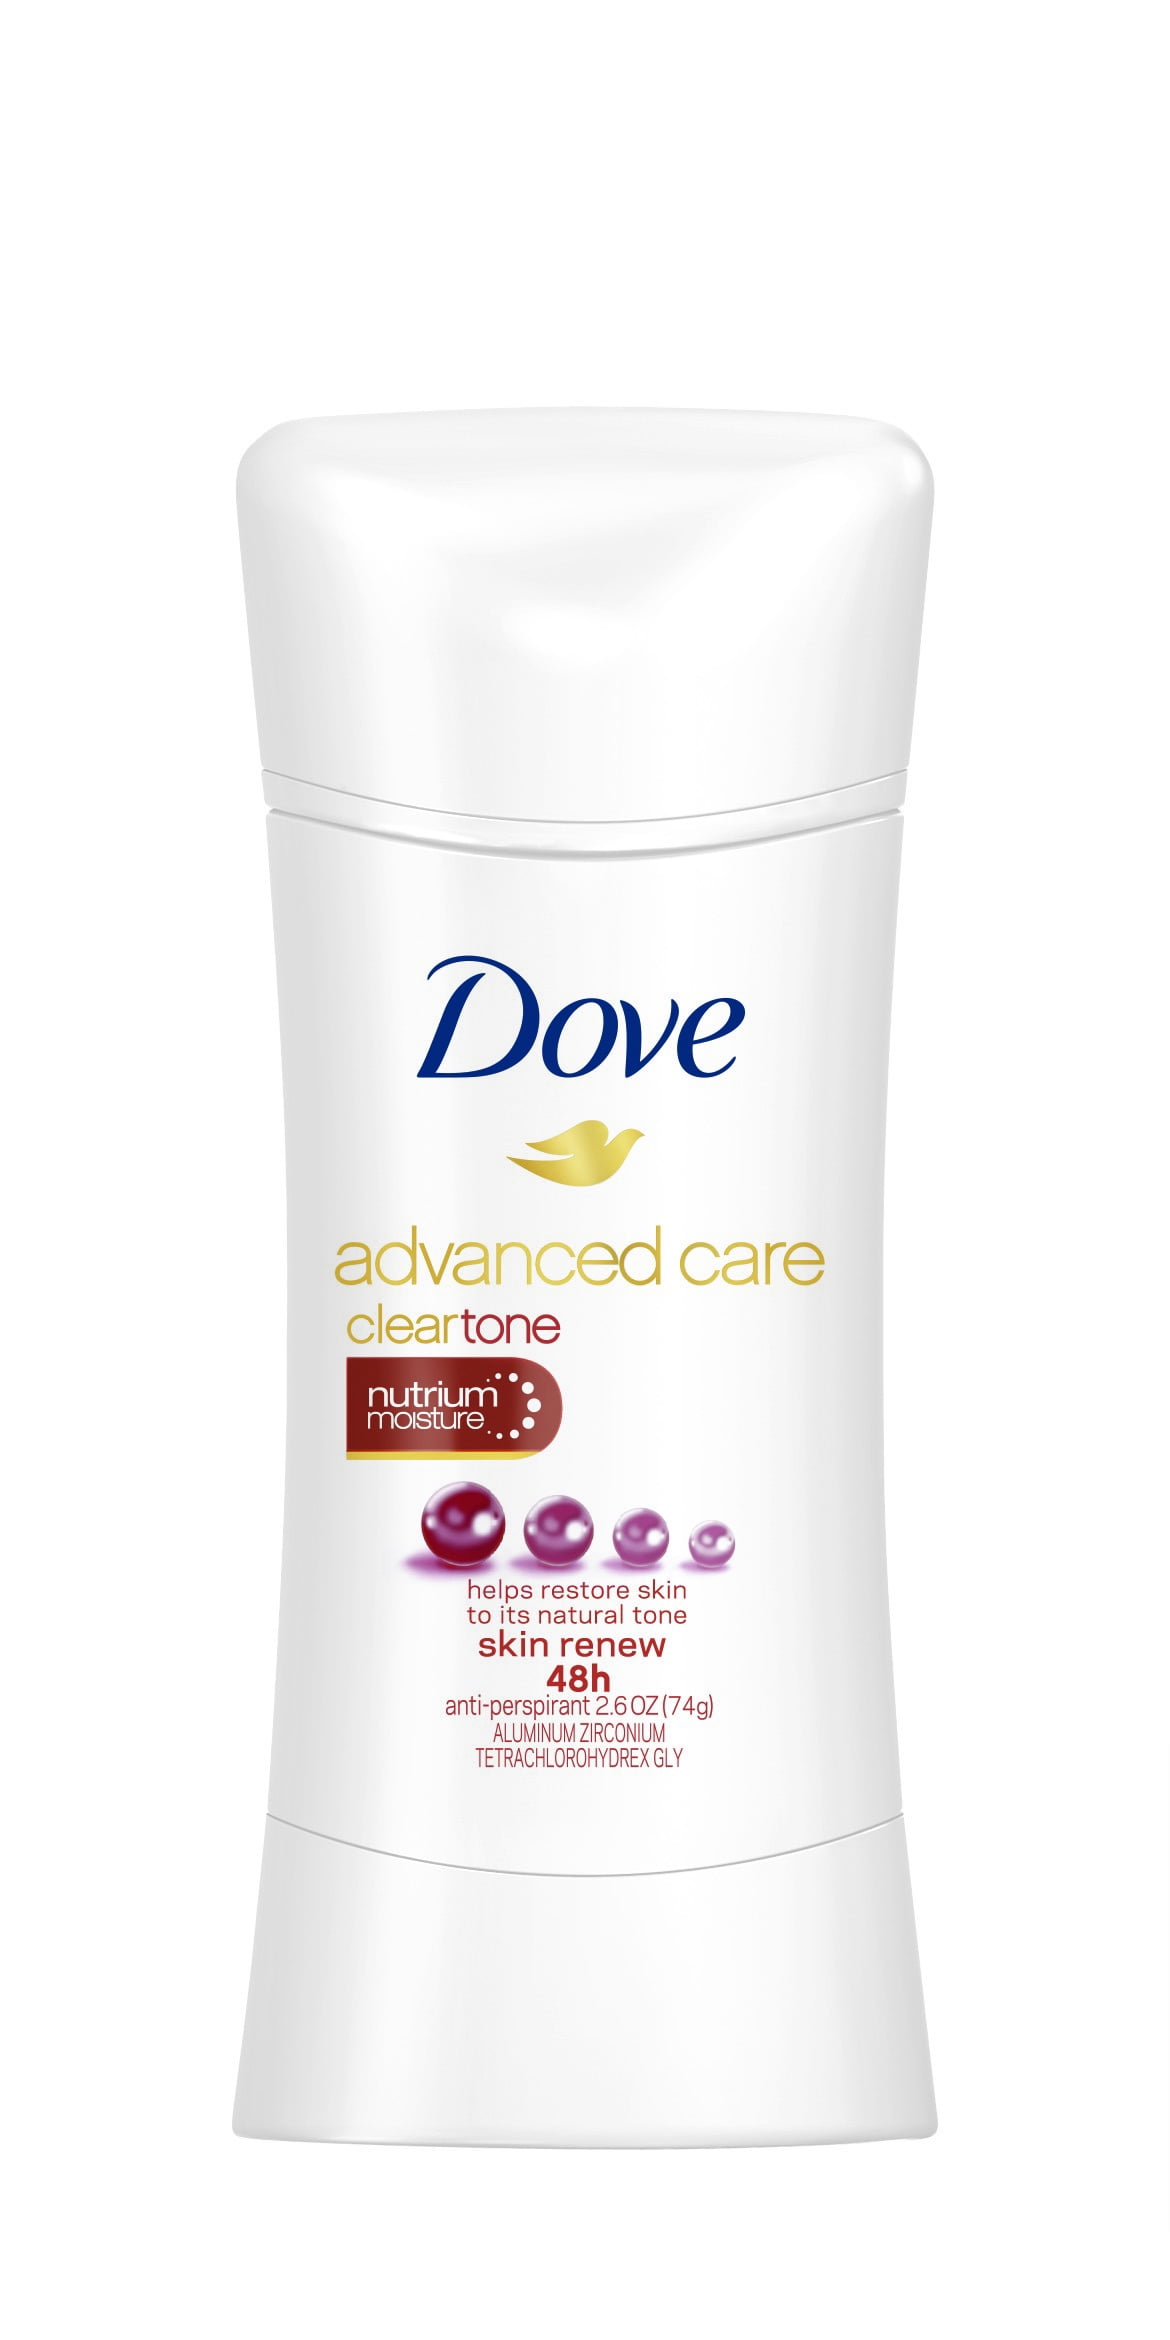 Advanced Antiperspirant ClearTone Skin Renew 2.6 oz Walmart.com